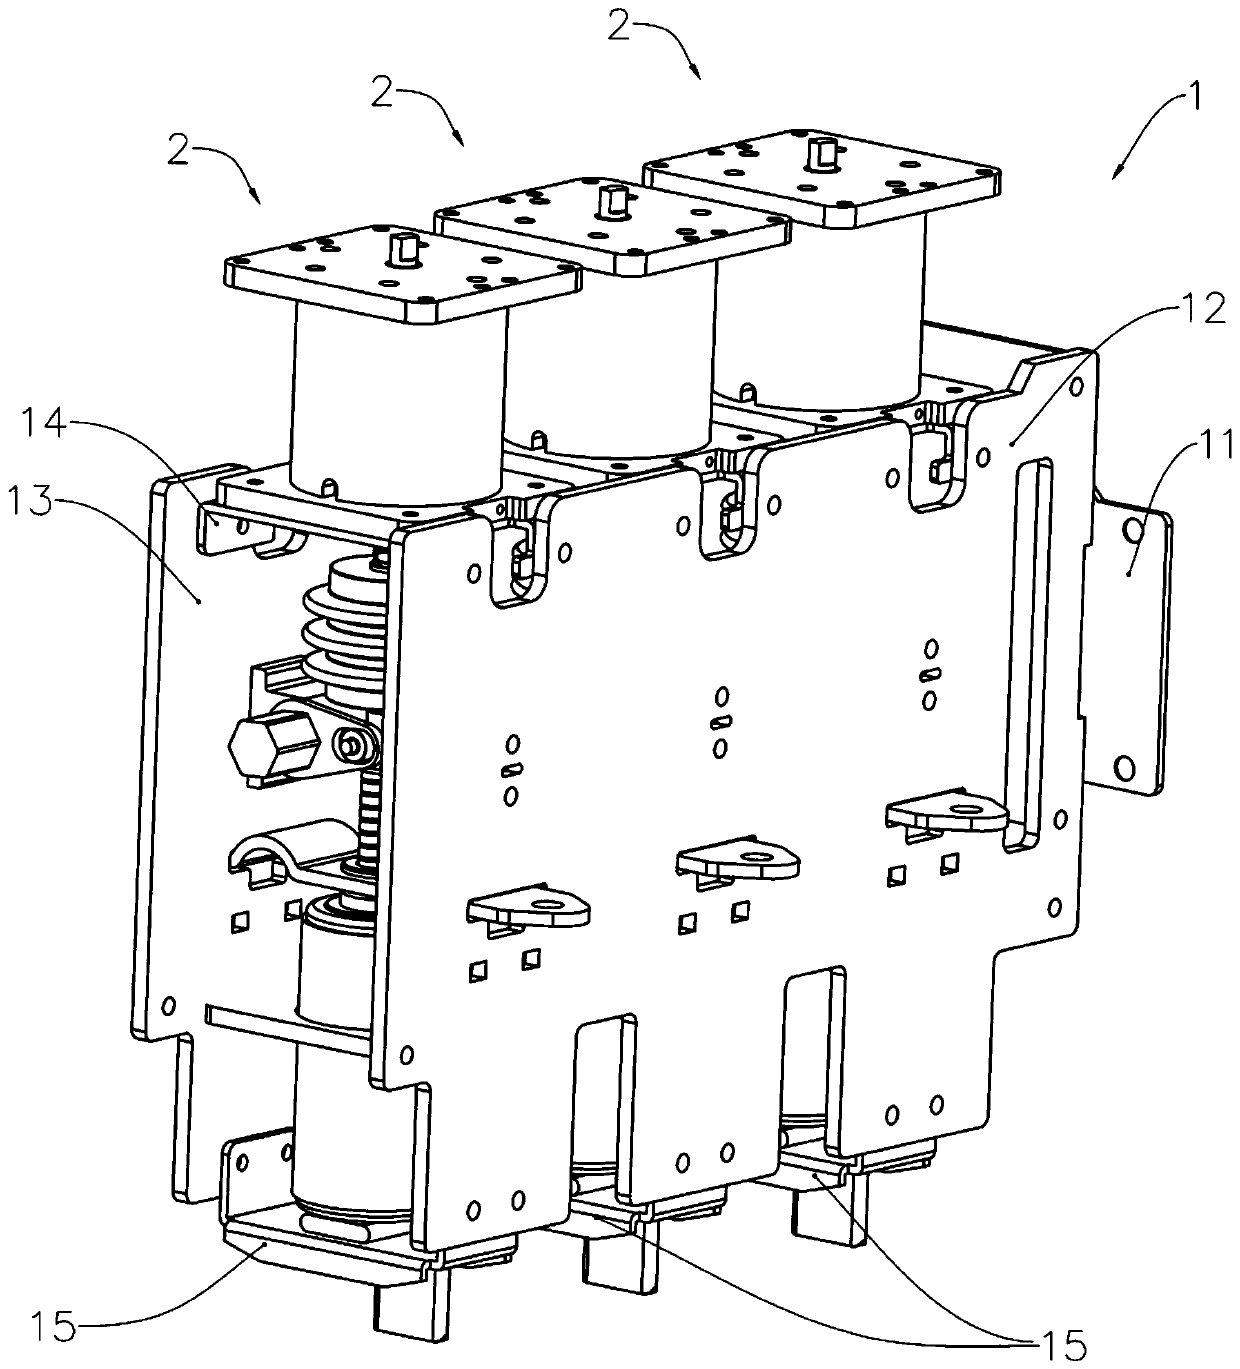 Permanent magnet vacuum circuit breaker and air inflation cabinet